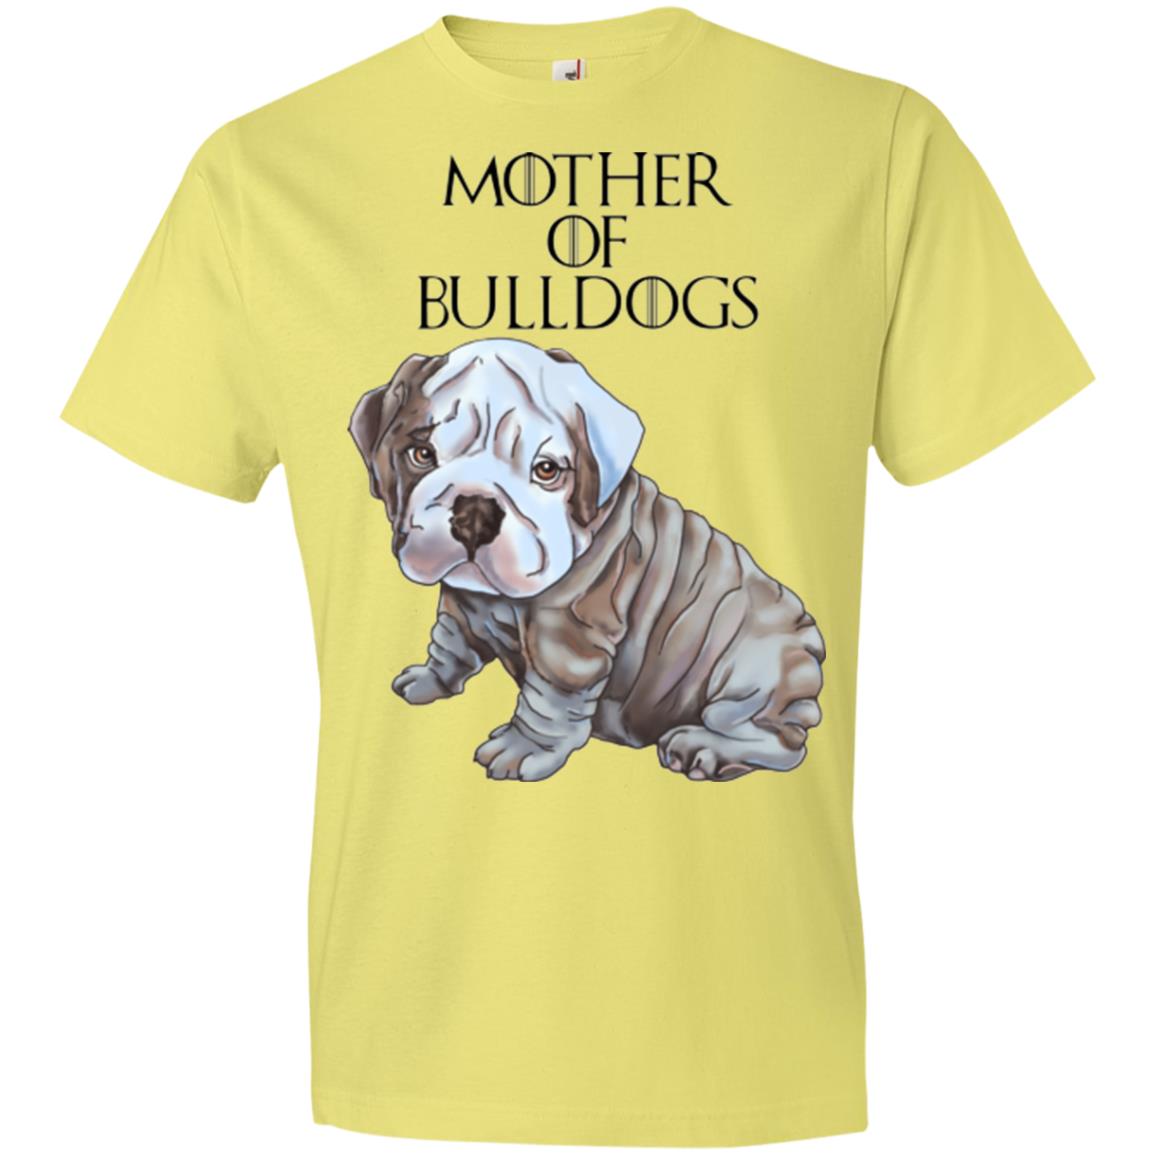 English Bulldog Shirt For Women, Girls - Mother of Bulldogs - GoneBold.gift